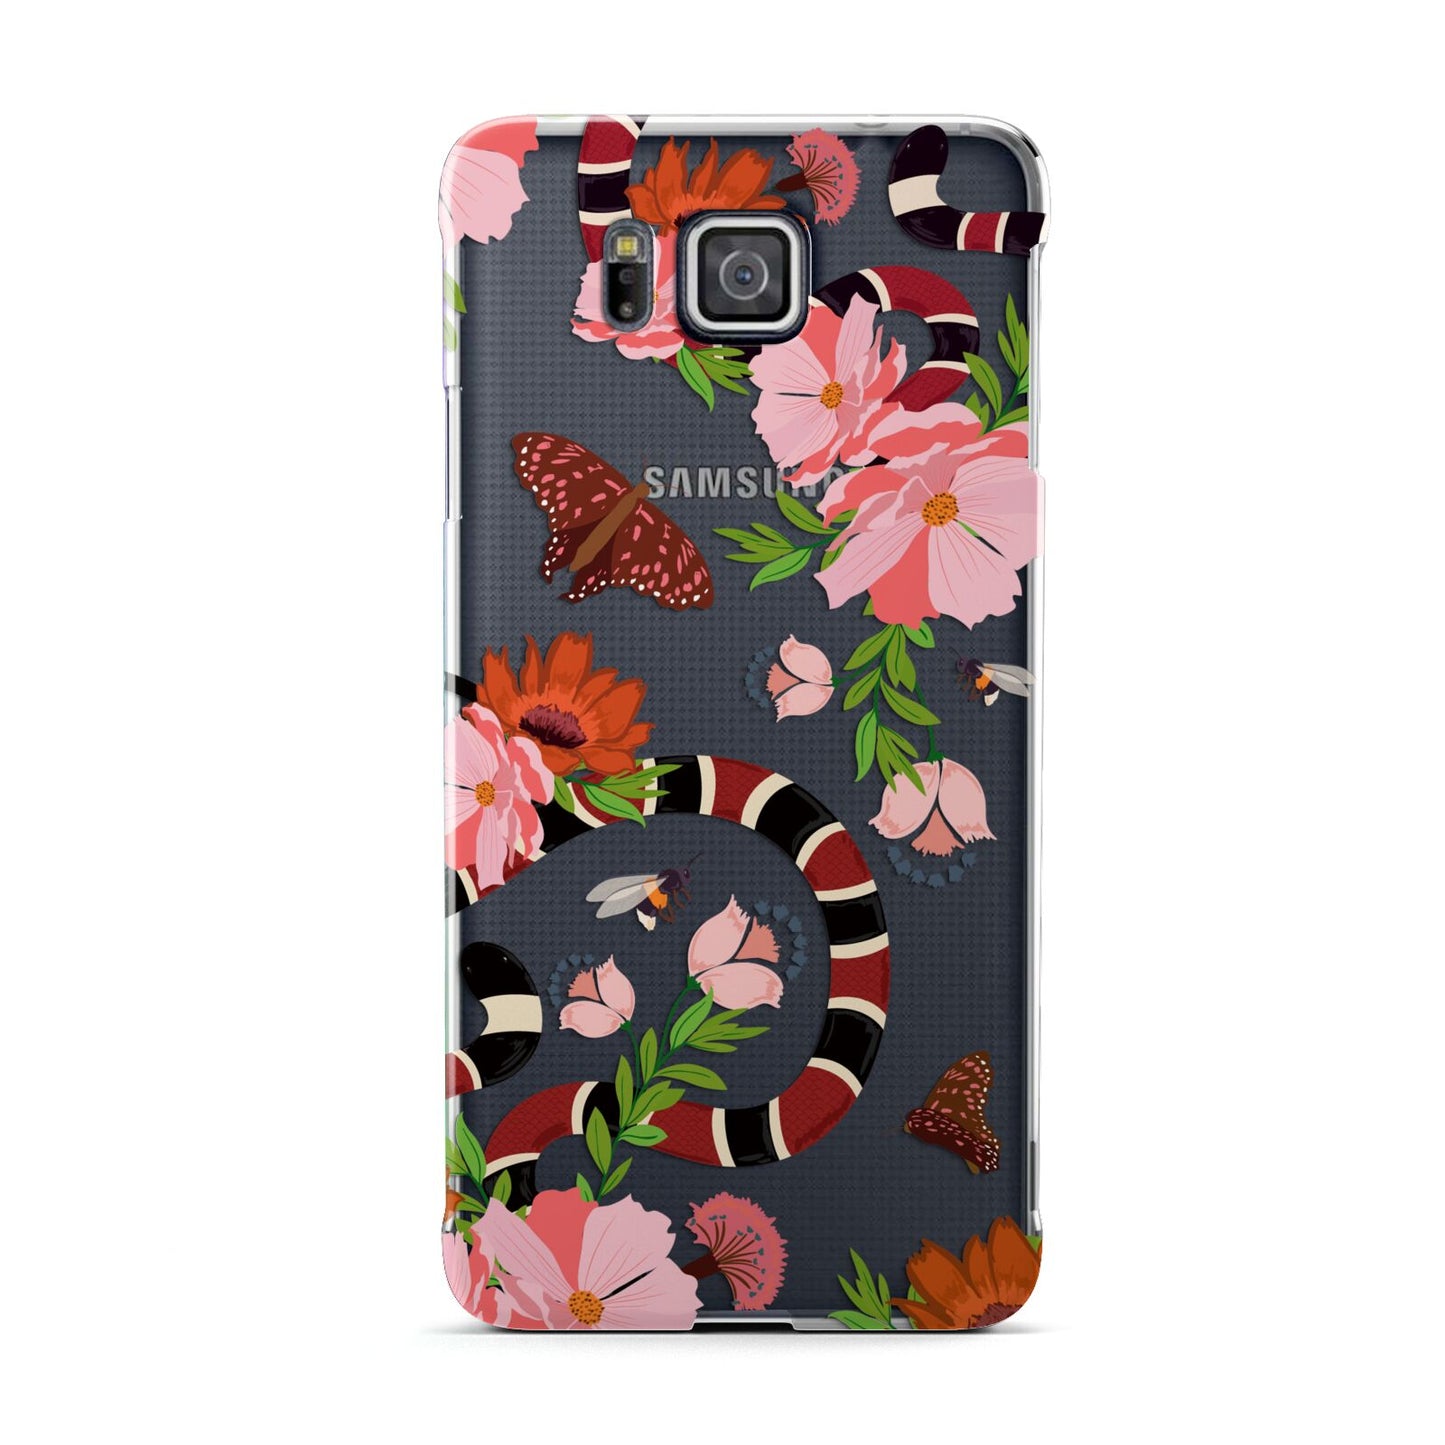 Floral Snake Samsung Galaxy Alpha Case